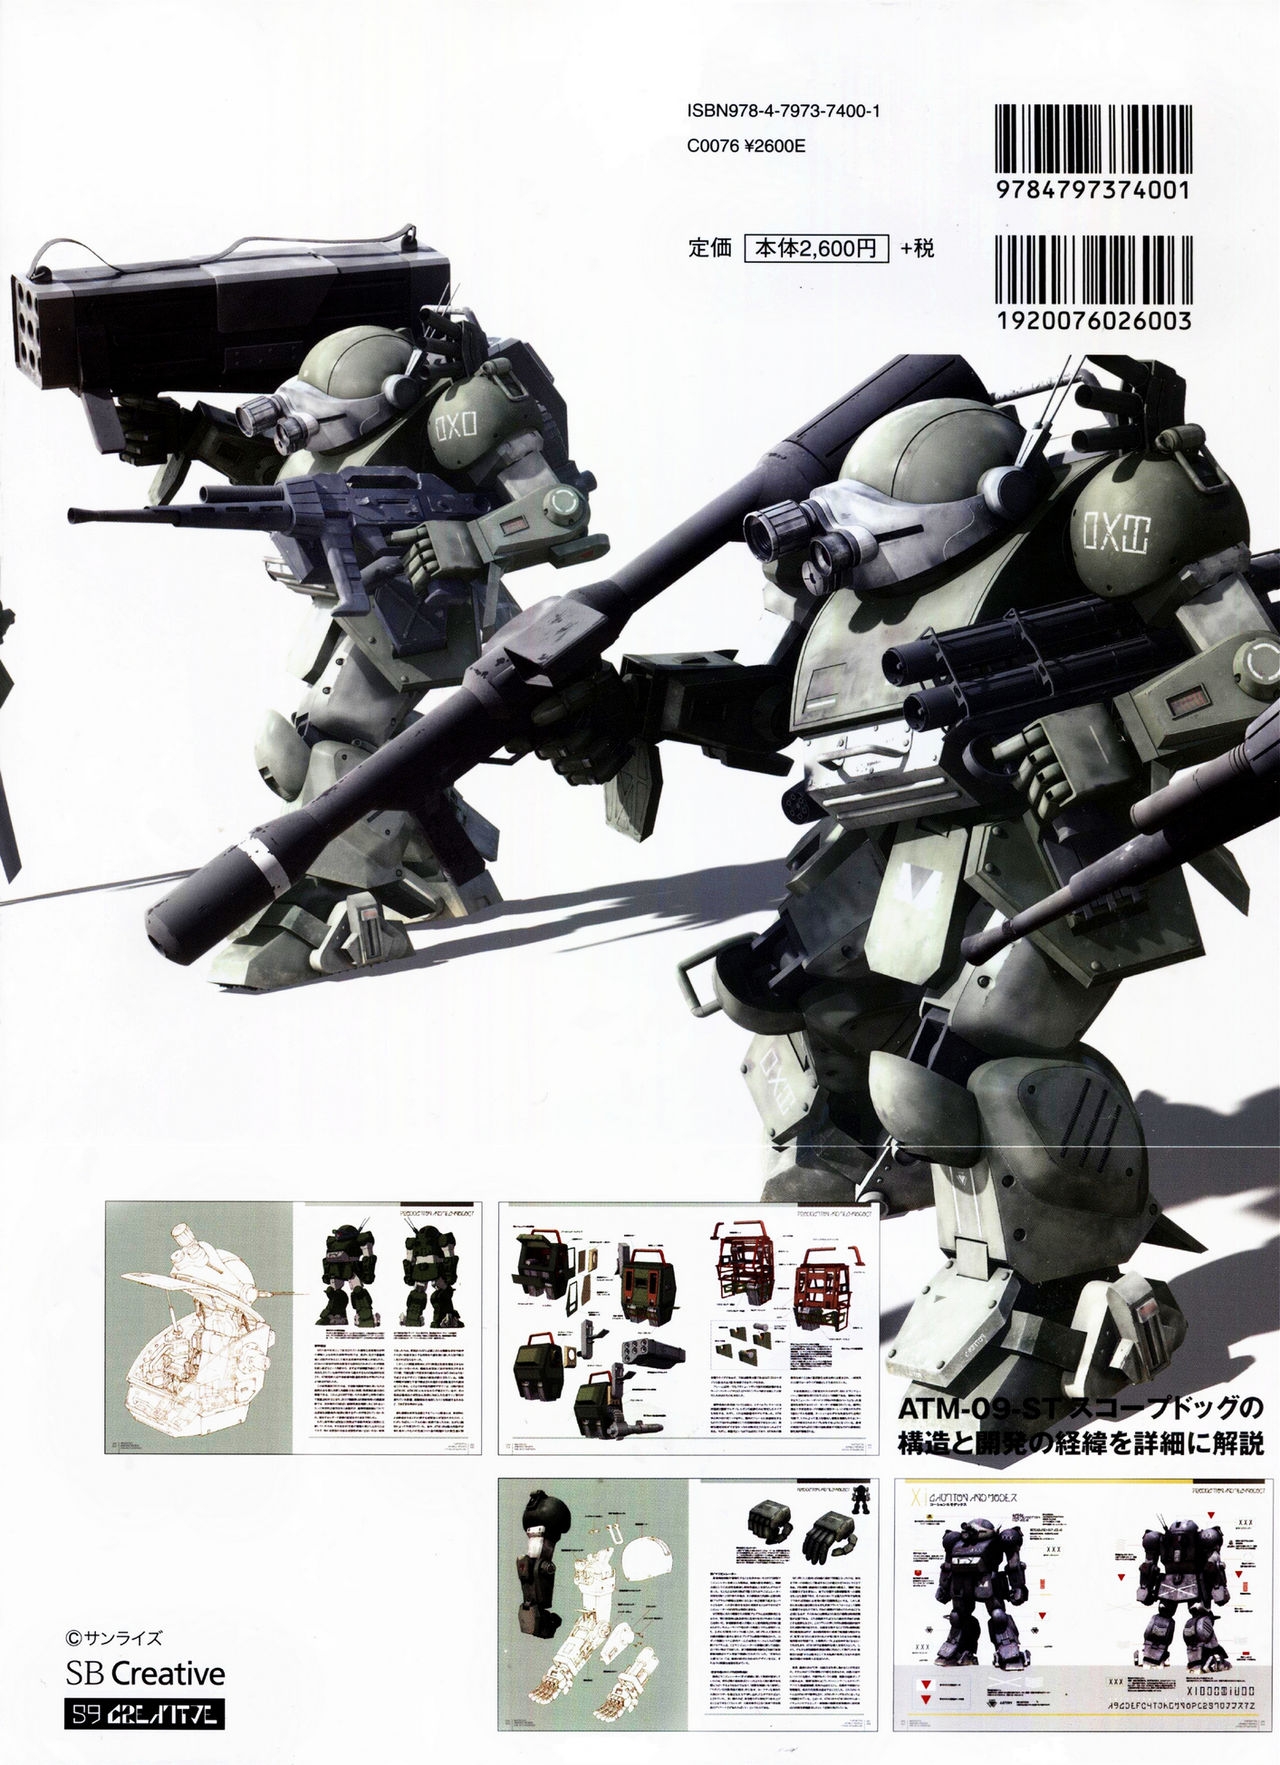 Master File - Armored Trooper AMT-09-ST Scopedog 3